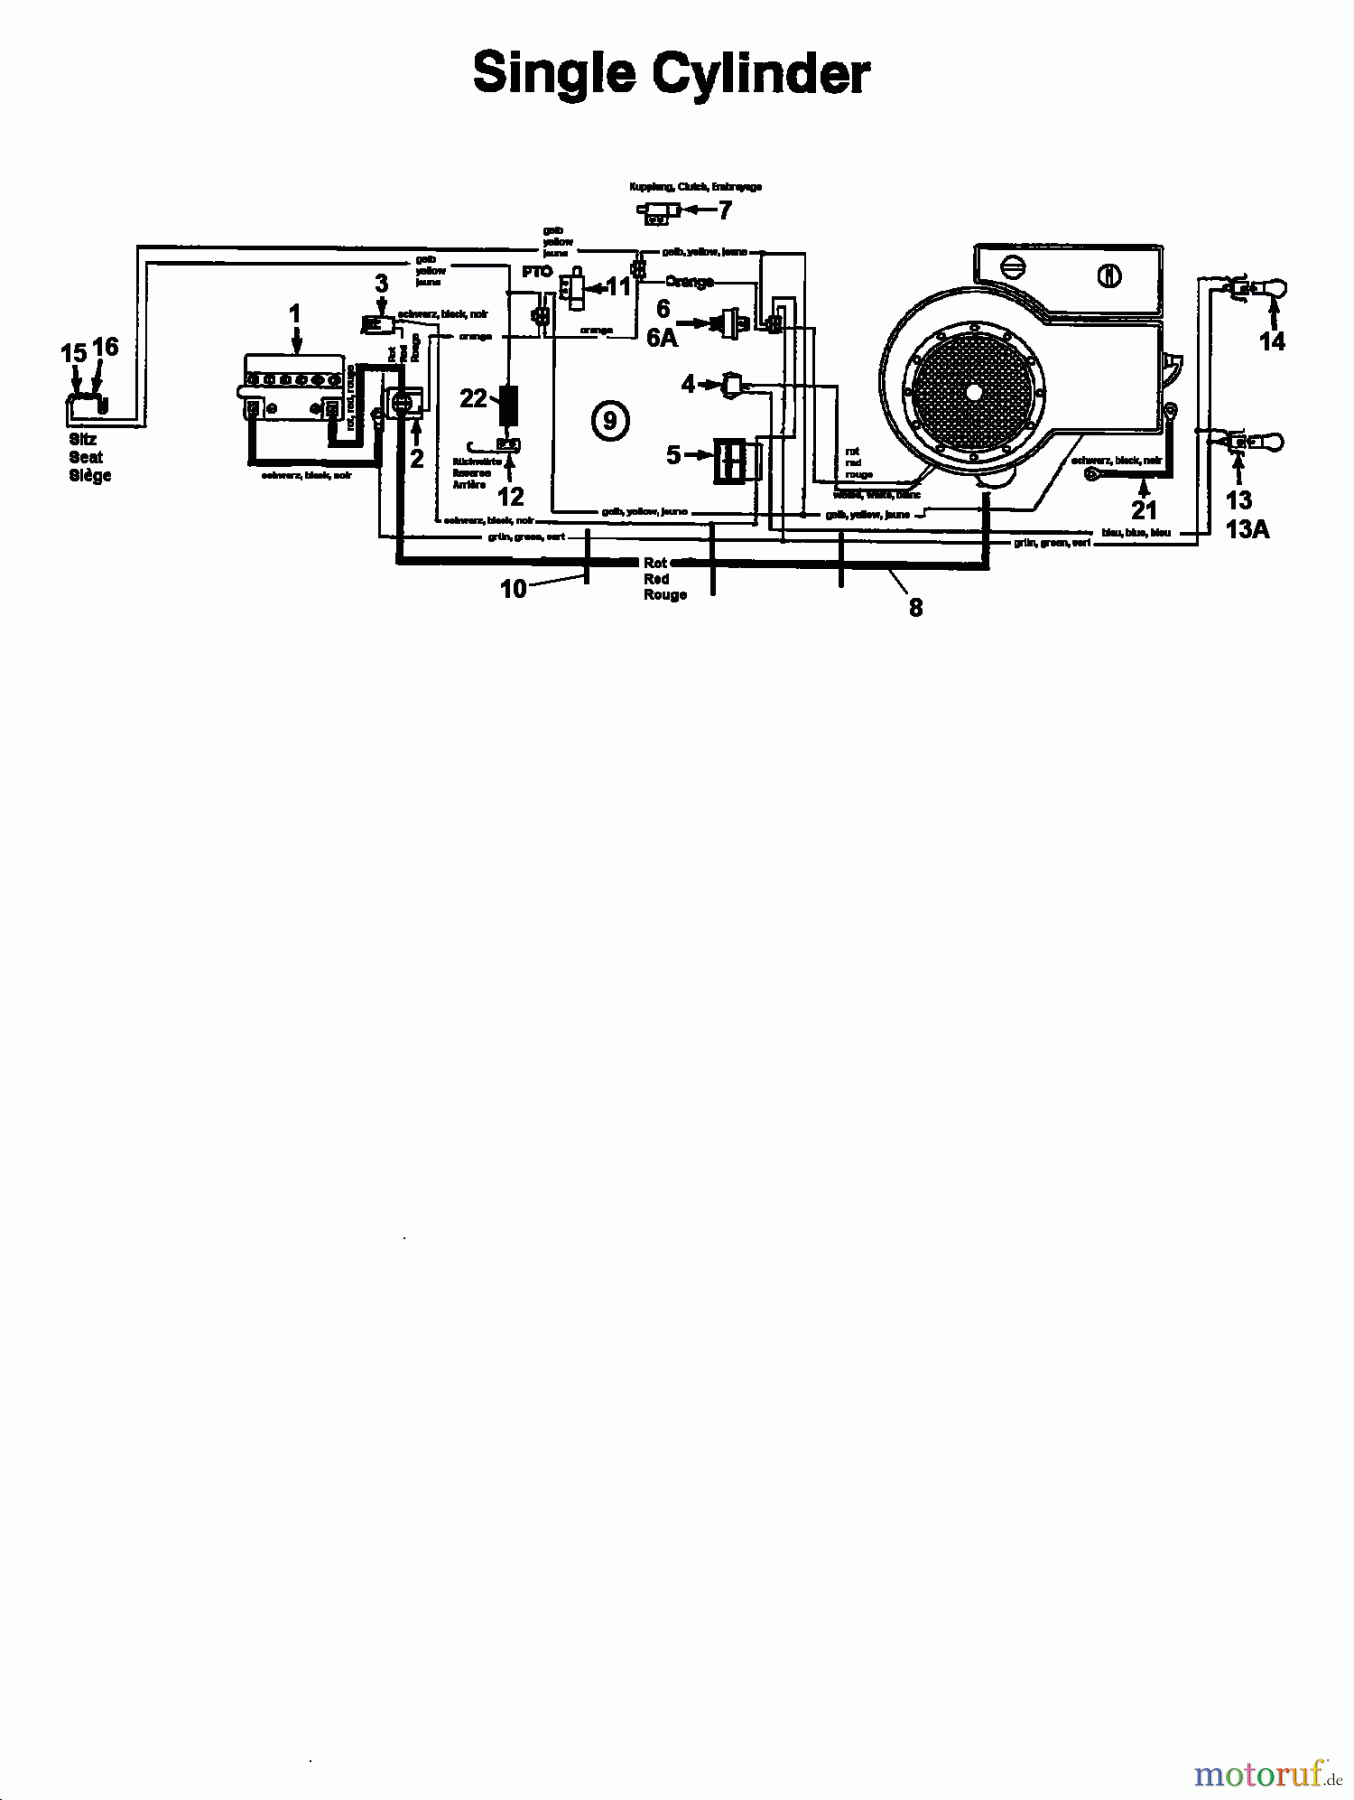  Super Lawn tractors Super 14-107 V 133S619G600  (1993) Wiring diagram single cylinder